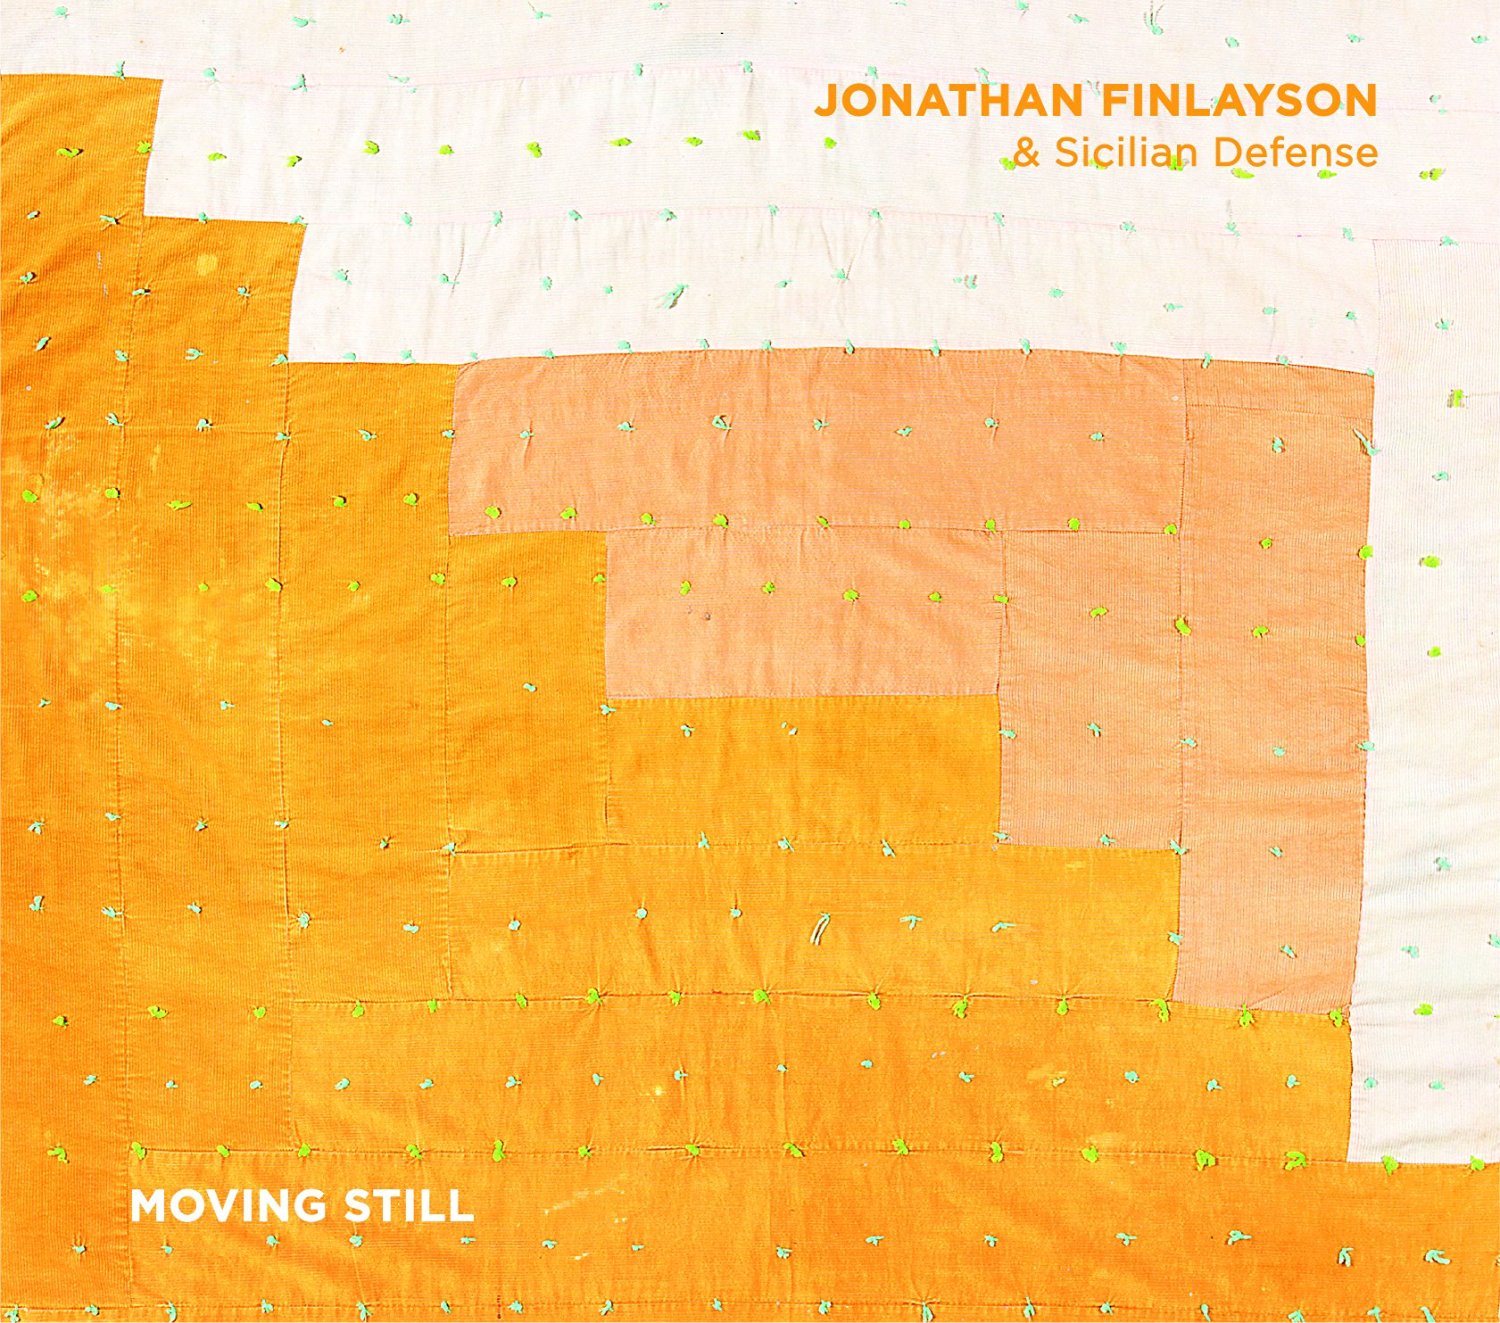 Jonathan Finlayson and Sicilian Defense - Moving Still